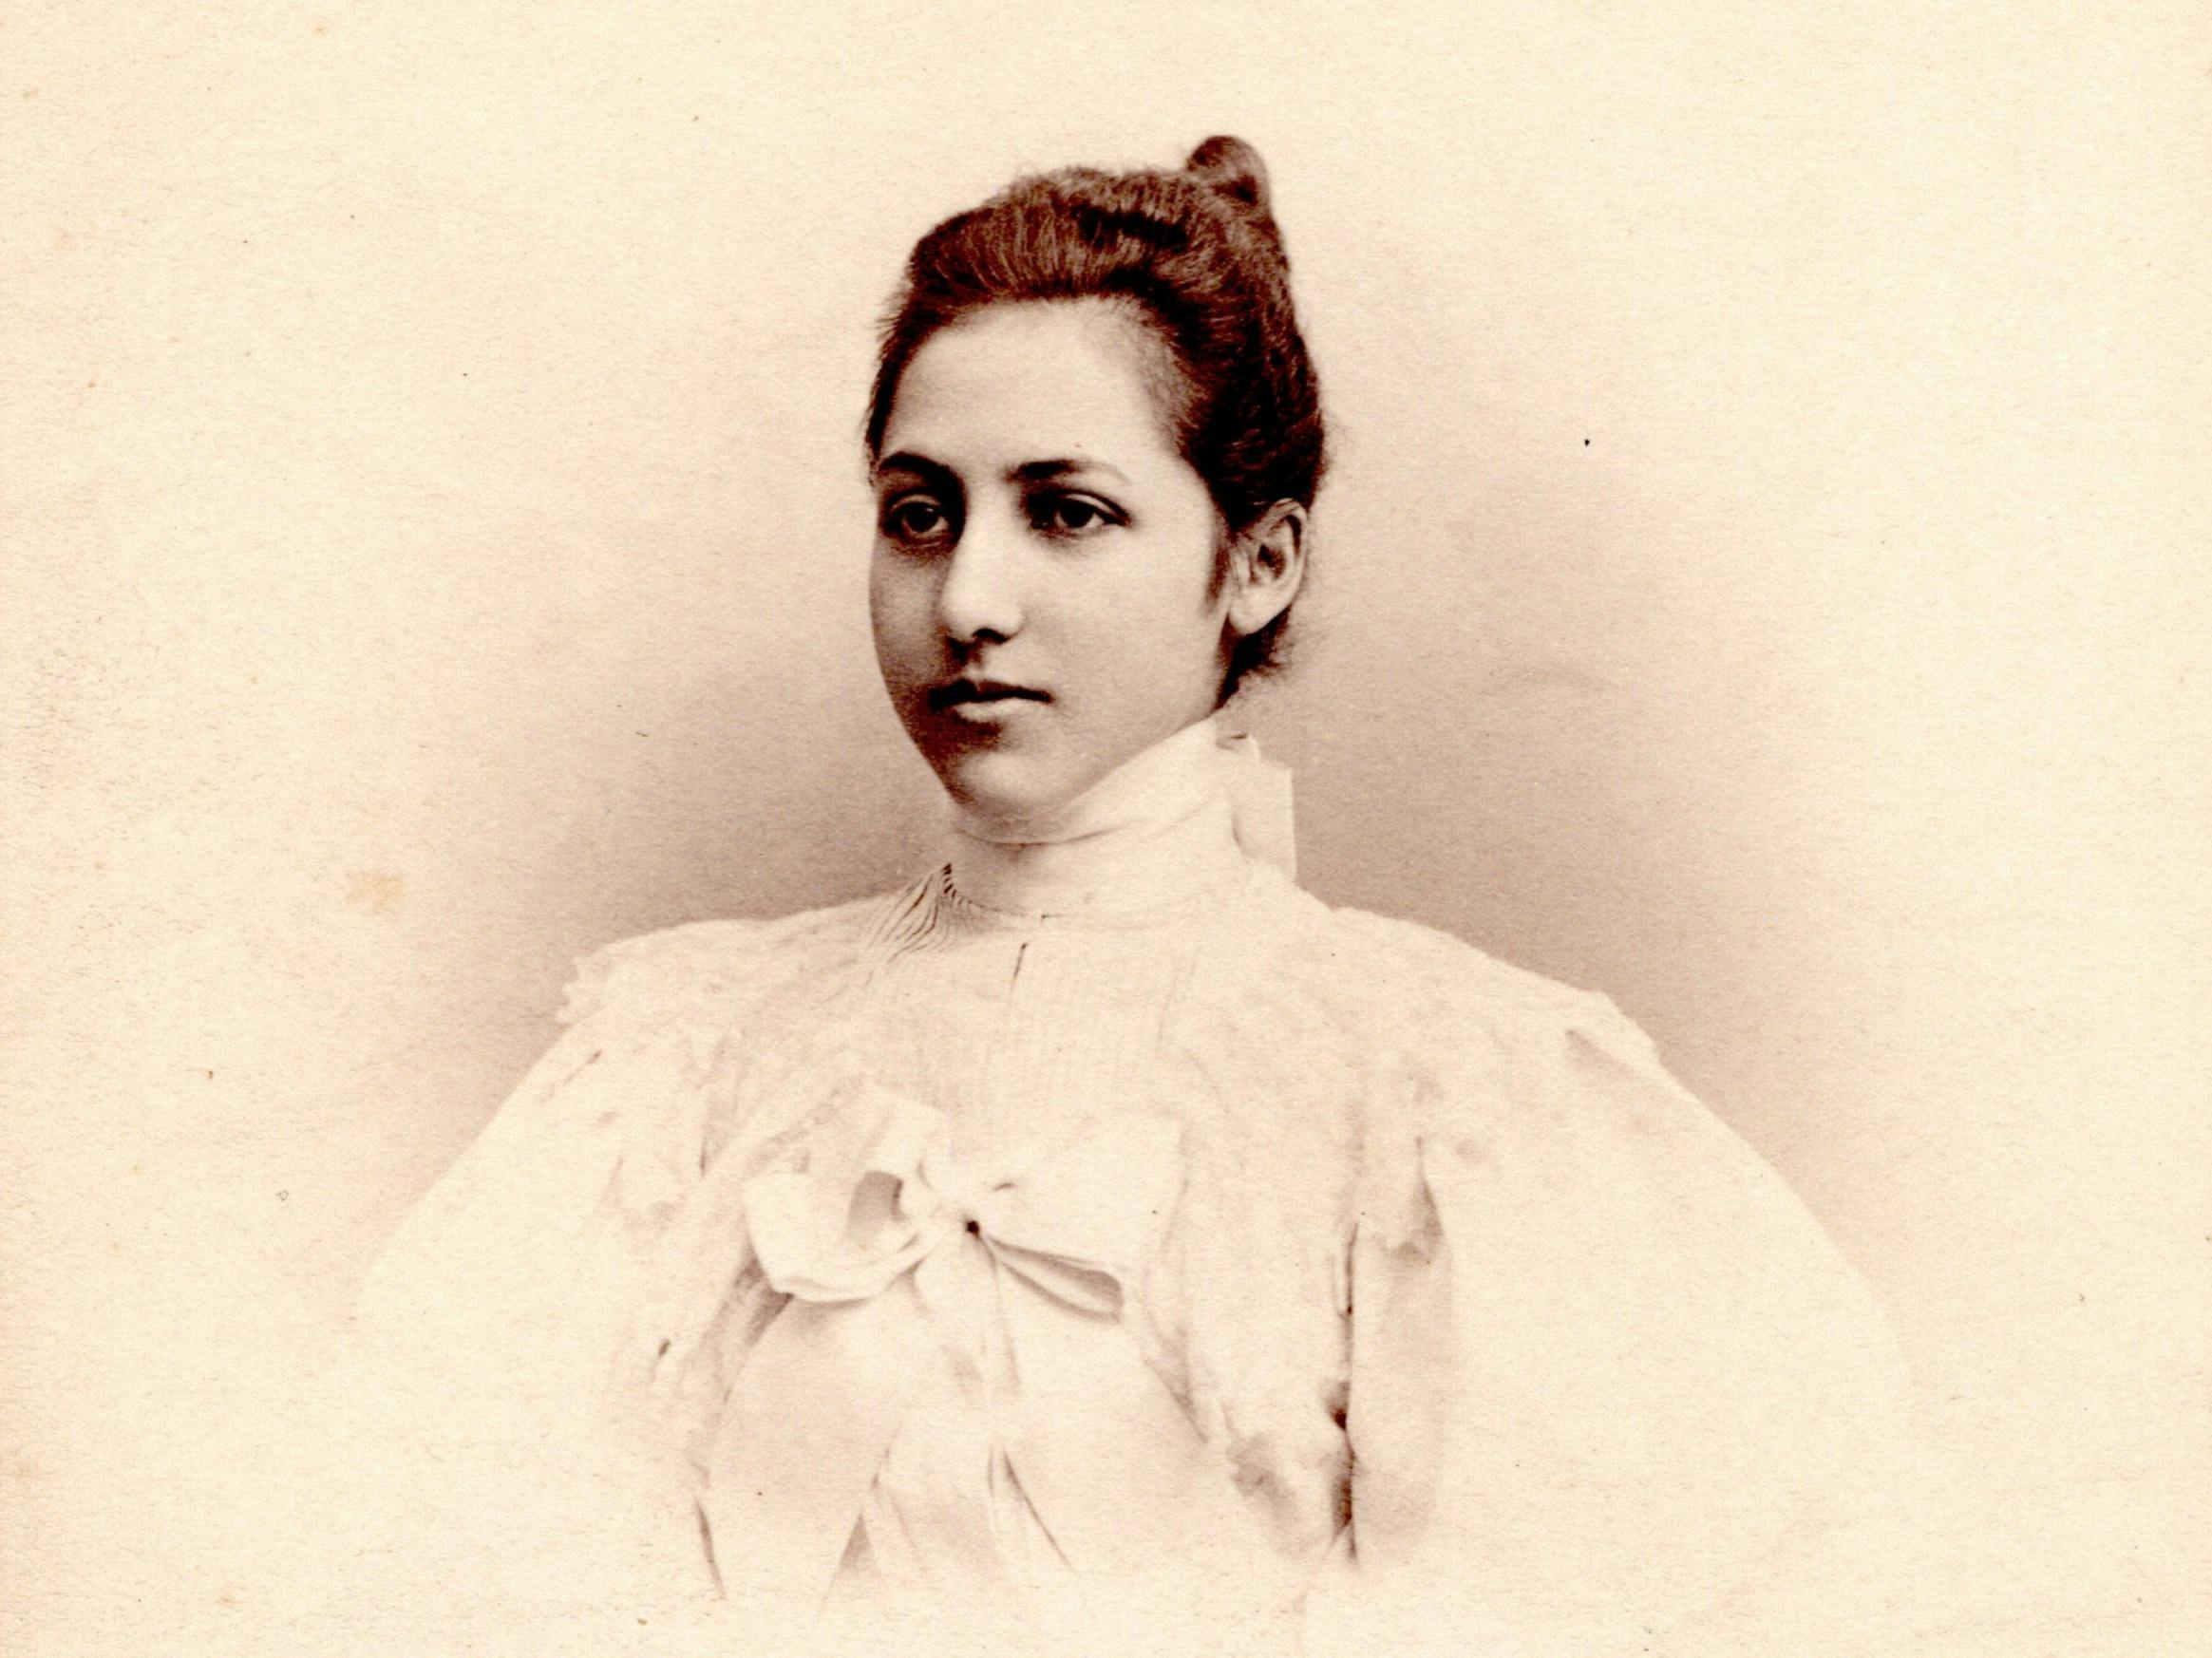 Photo of Princess Catherine circa 1895 (Peter Bance)